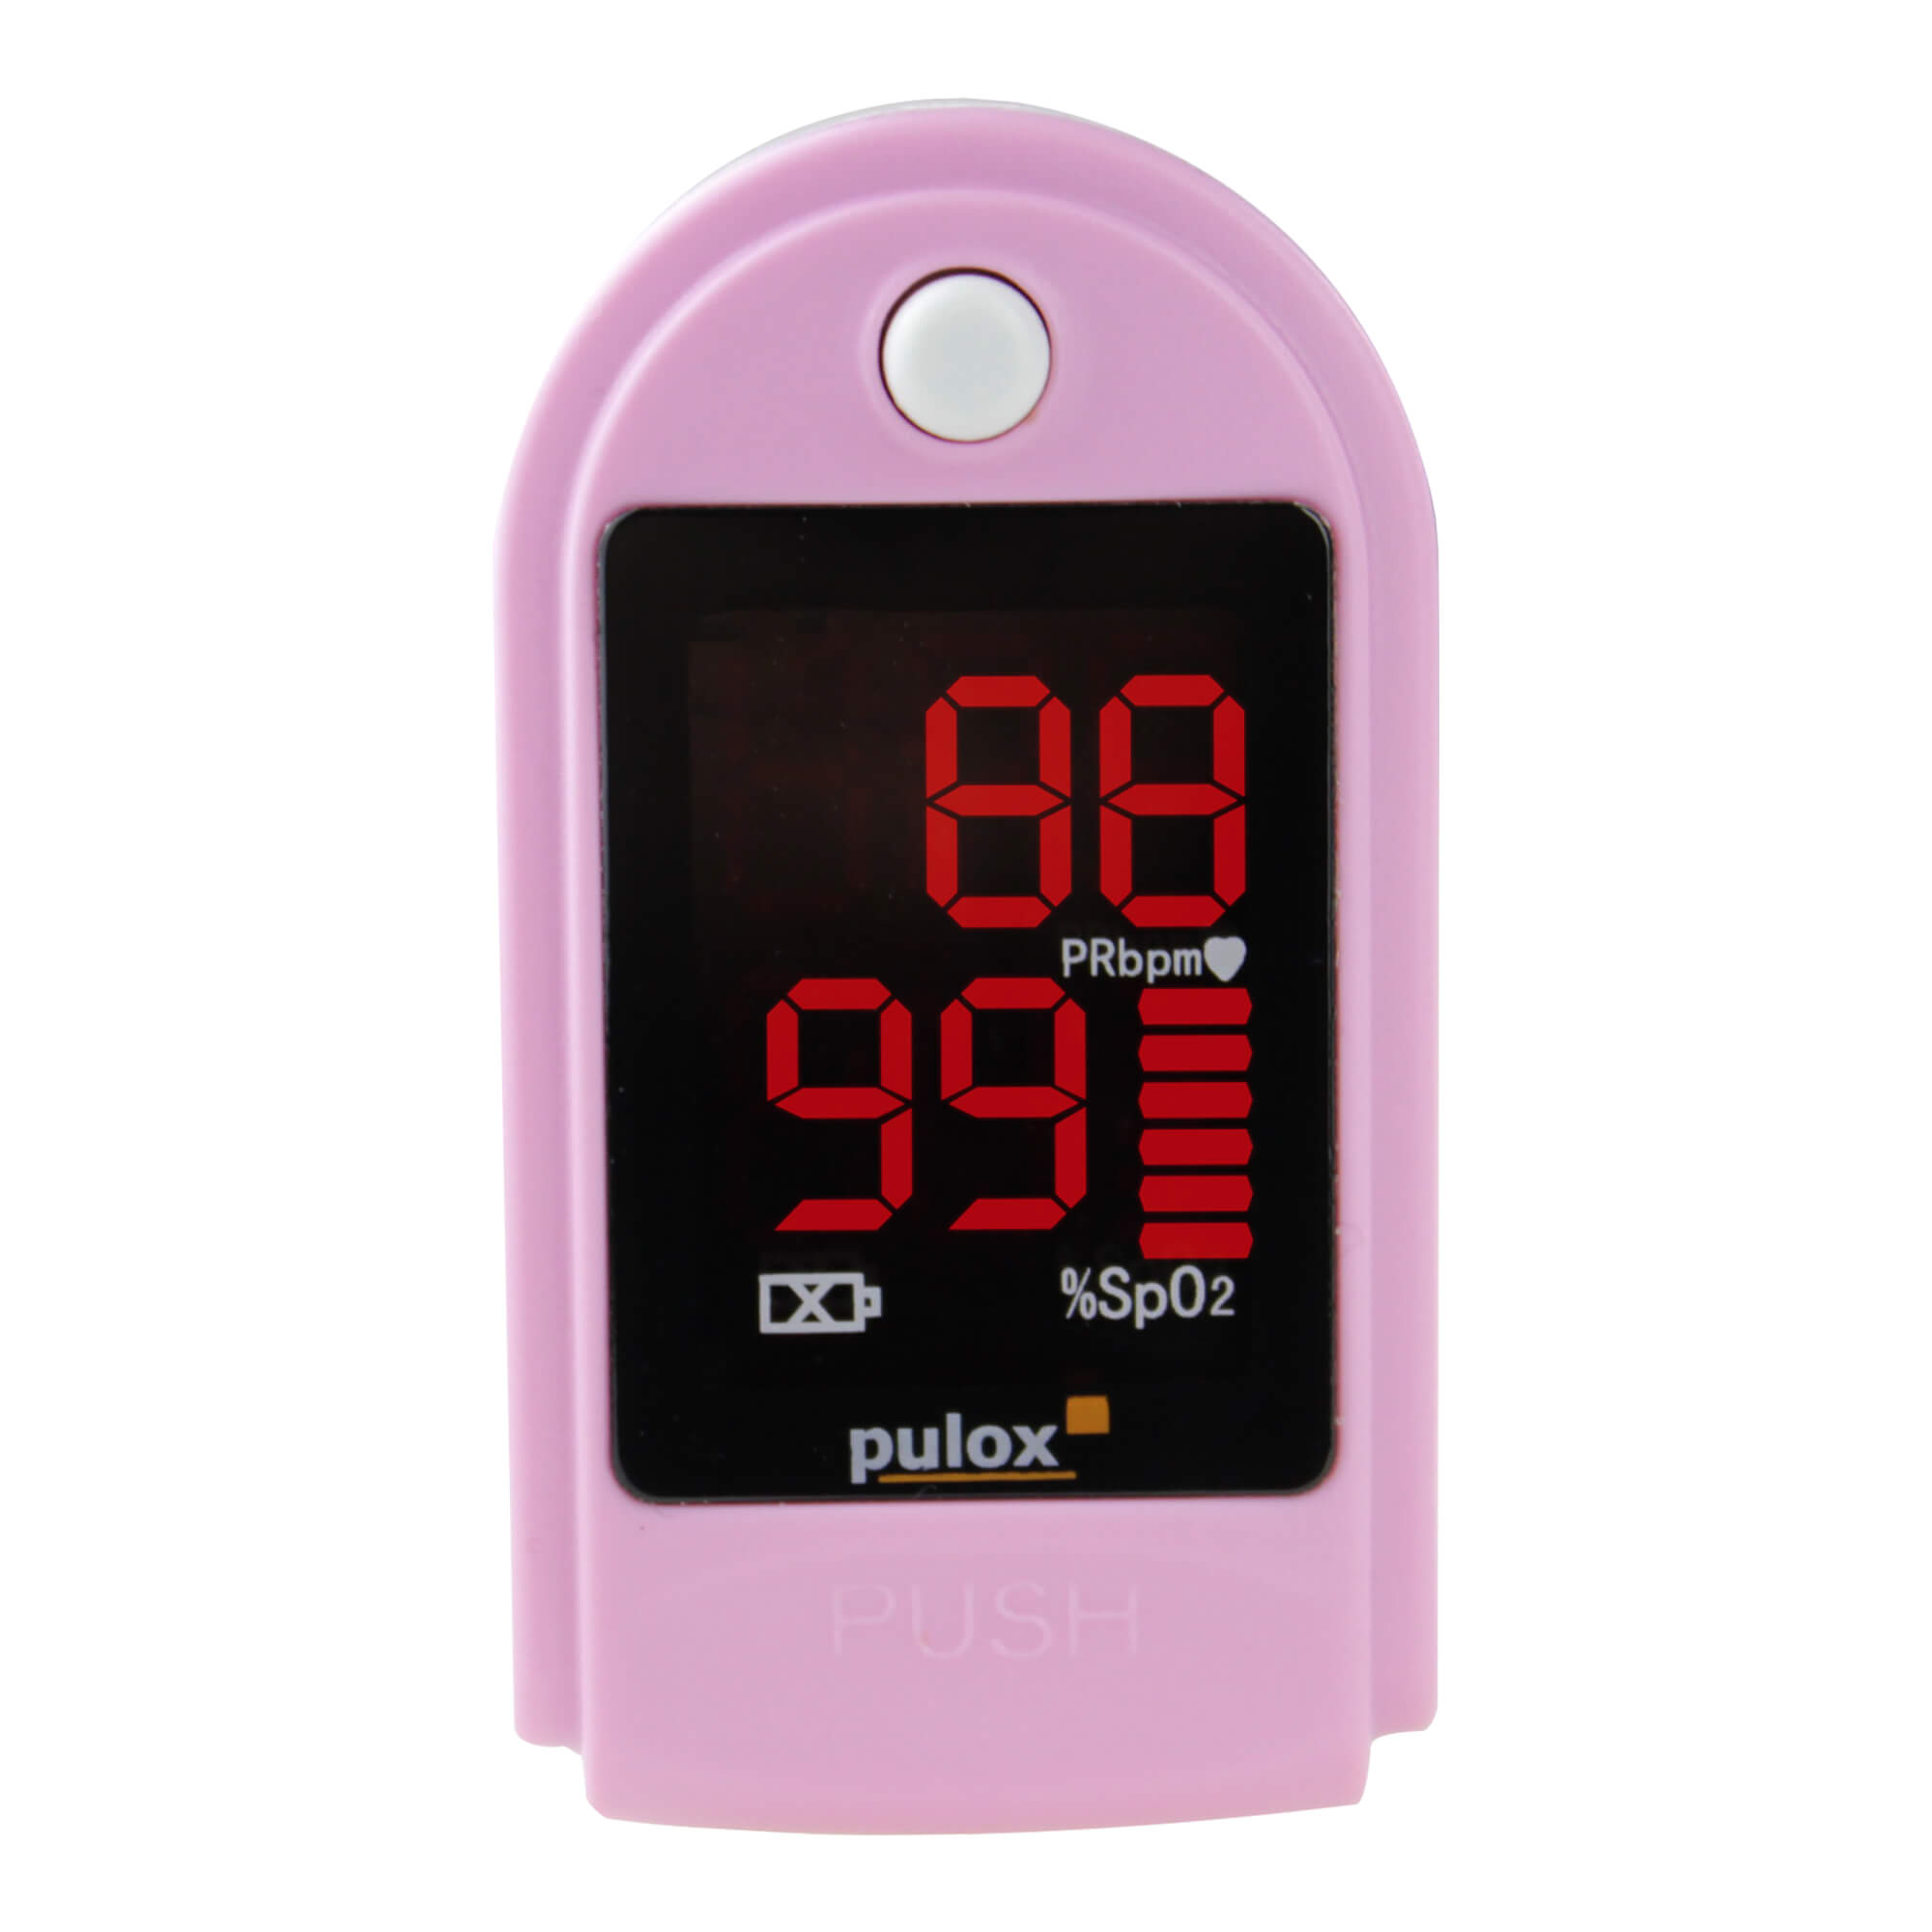 Finger-Pulsoximeter. Mit LED-Display, Batterien und Zubehör. Farbe: rosa.